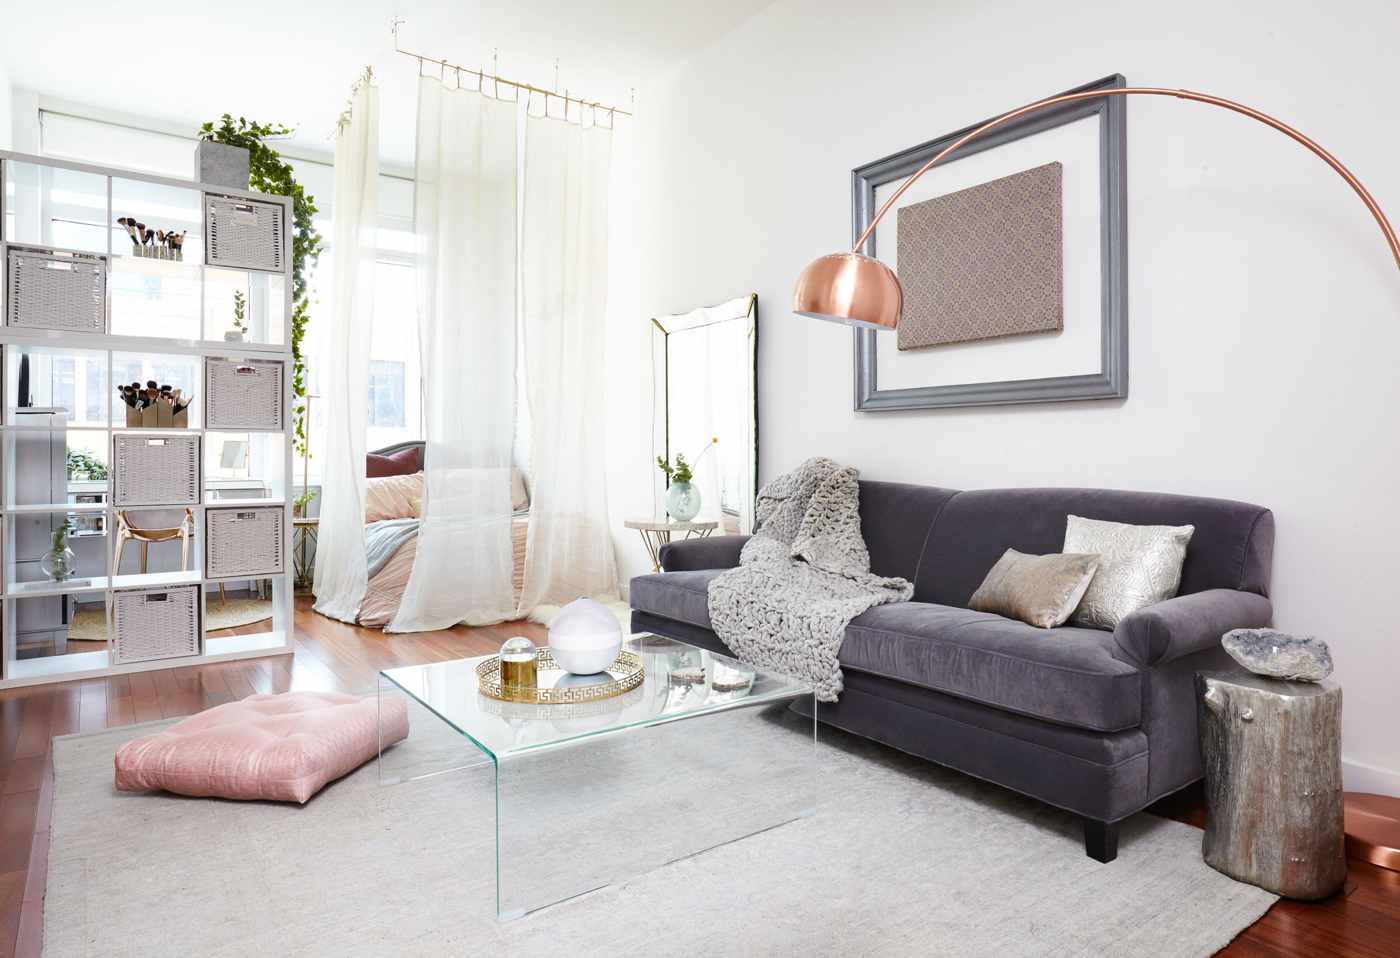 Living room plus bedroom interior ideas shelf as room divider sky bed vintage interior copper pink accent